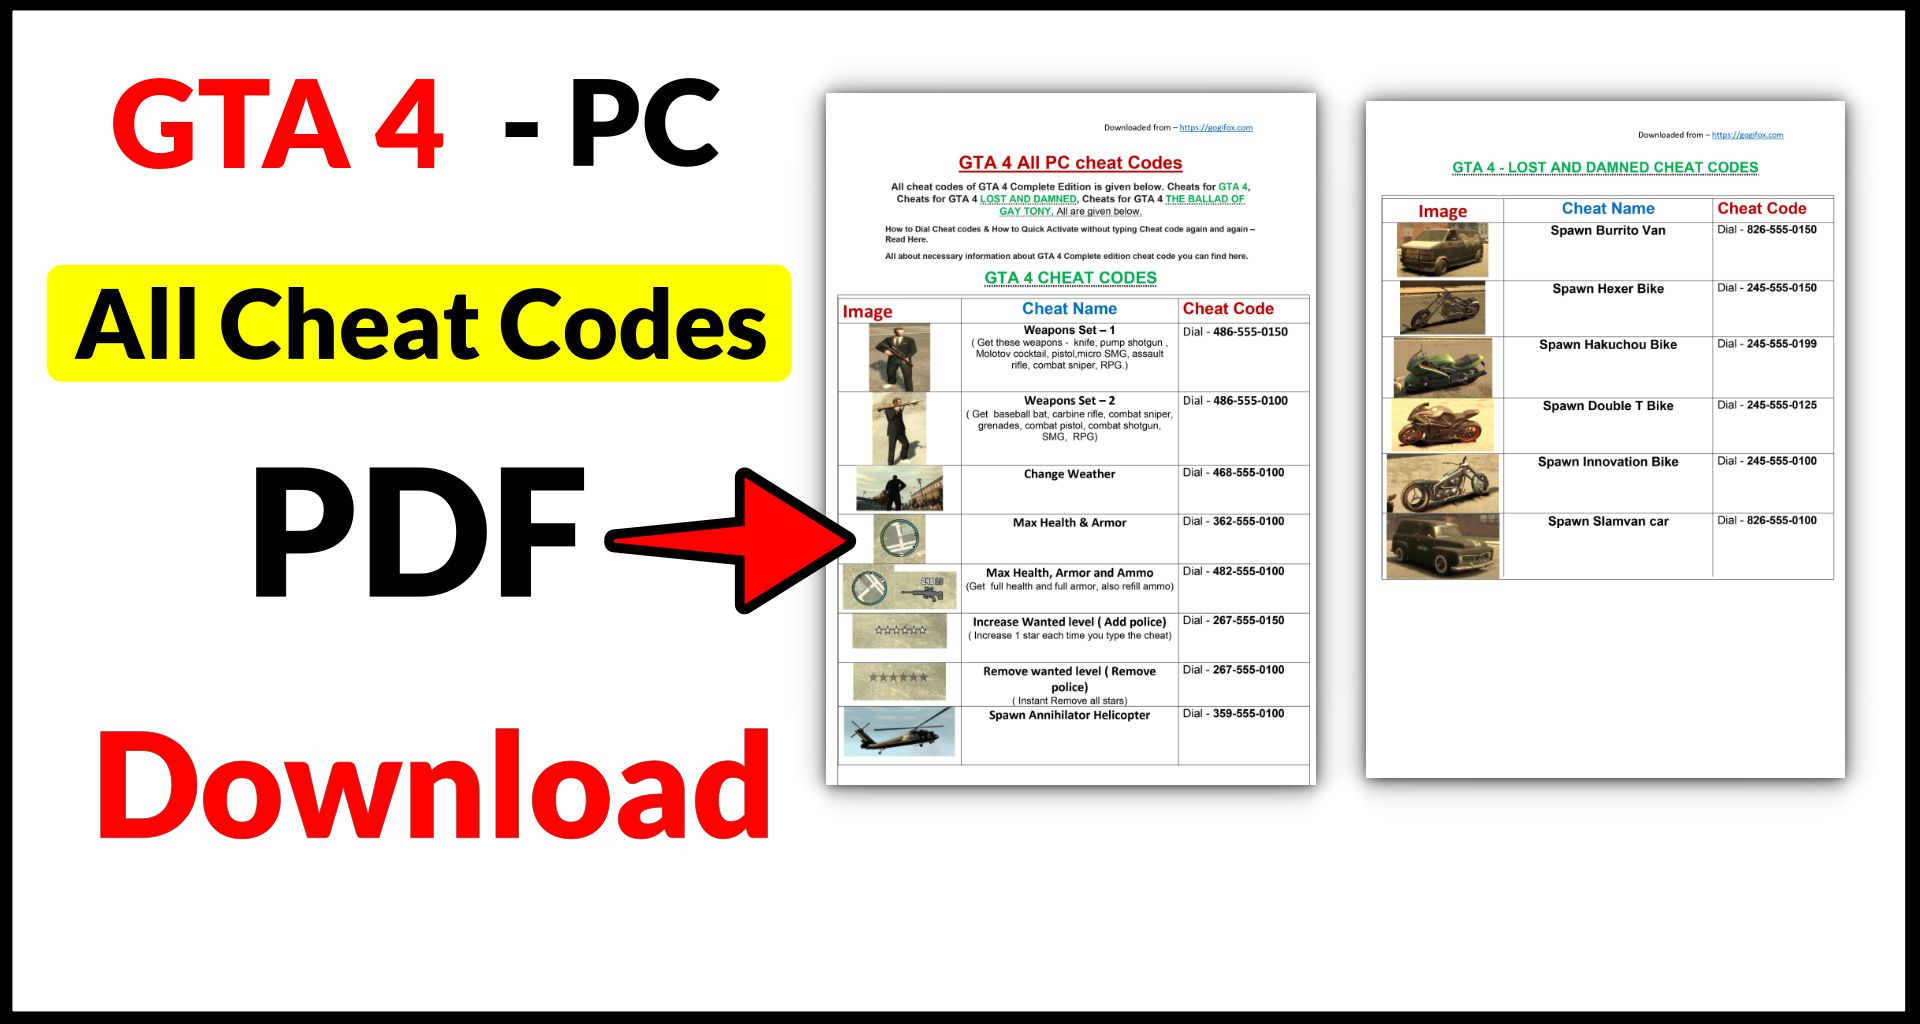 GTA 4 PC All cheat codes - Full list PDF file Download